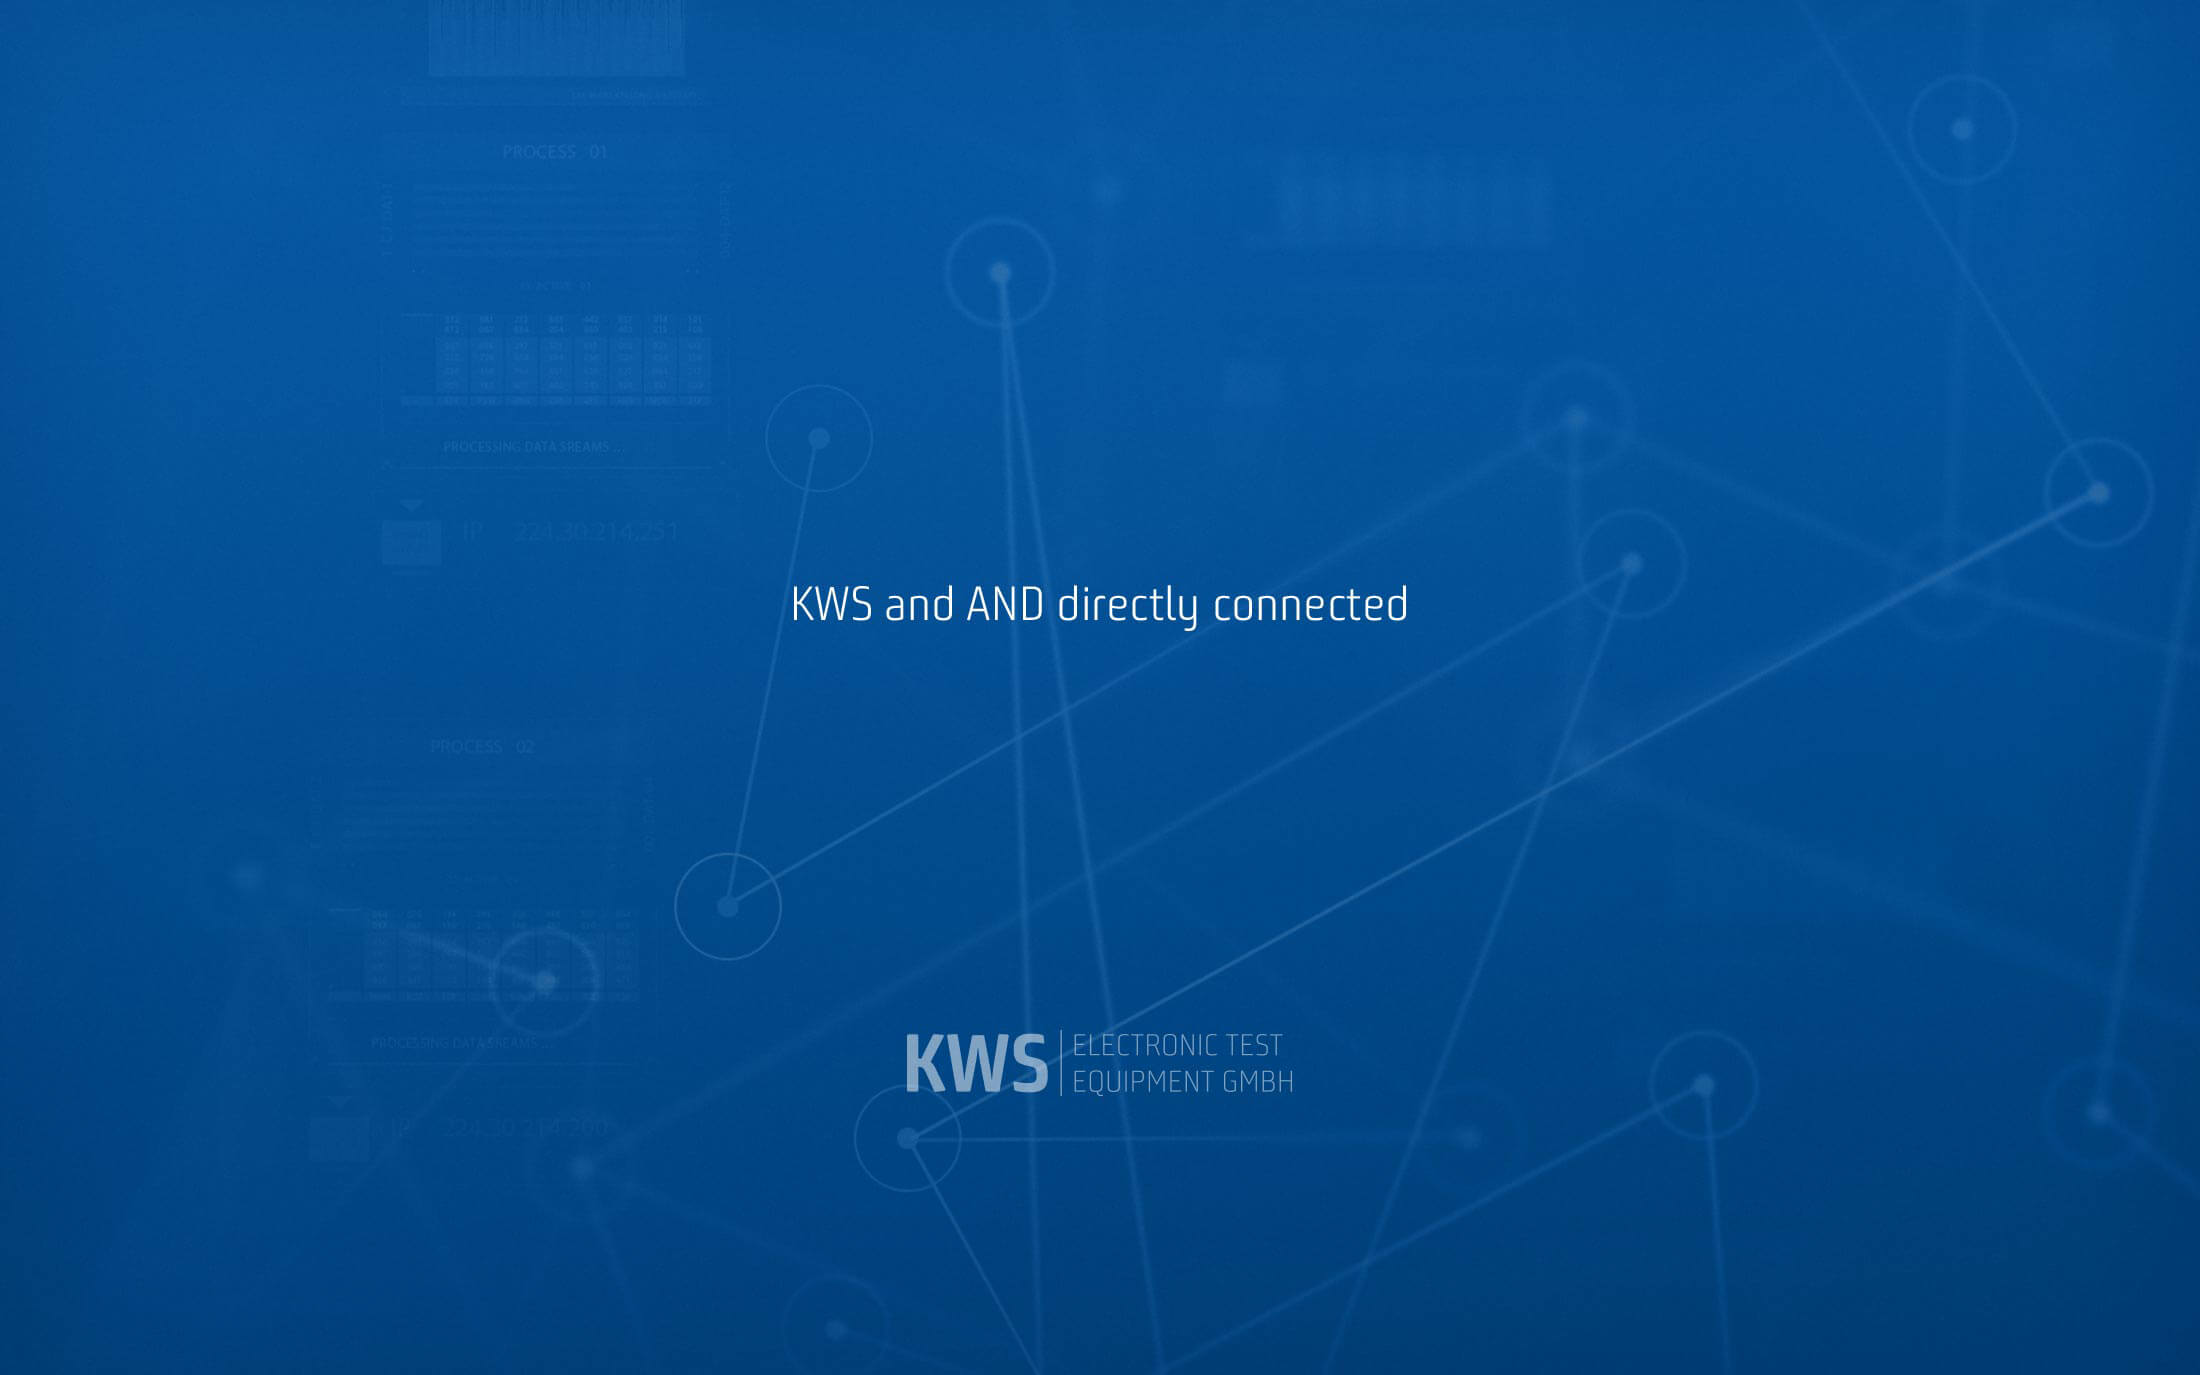 KWS Electronic News 2020: Network documentation and measurement technology